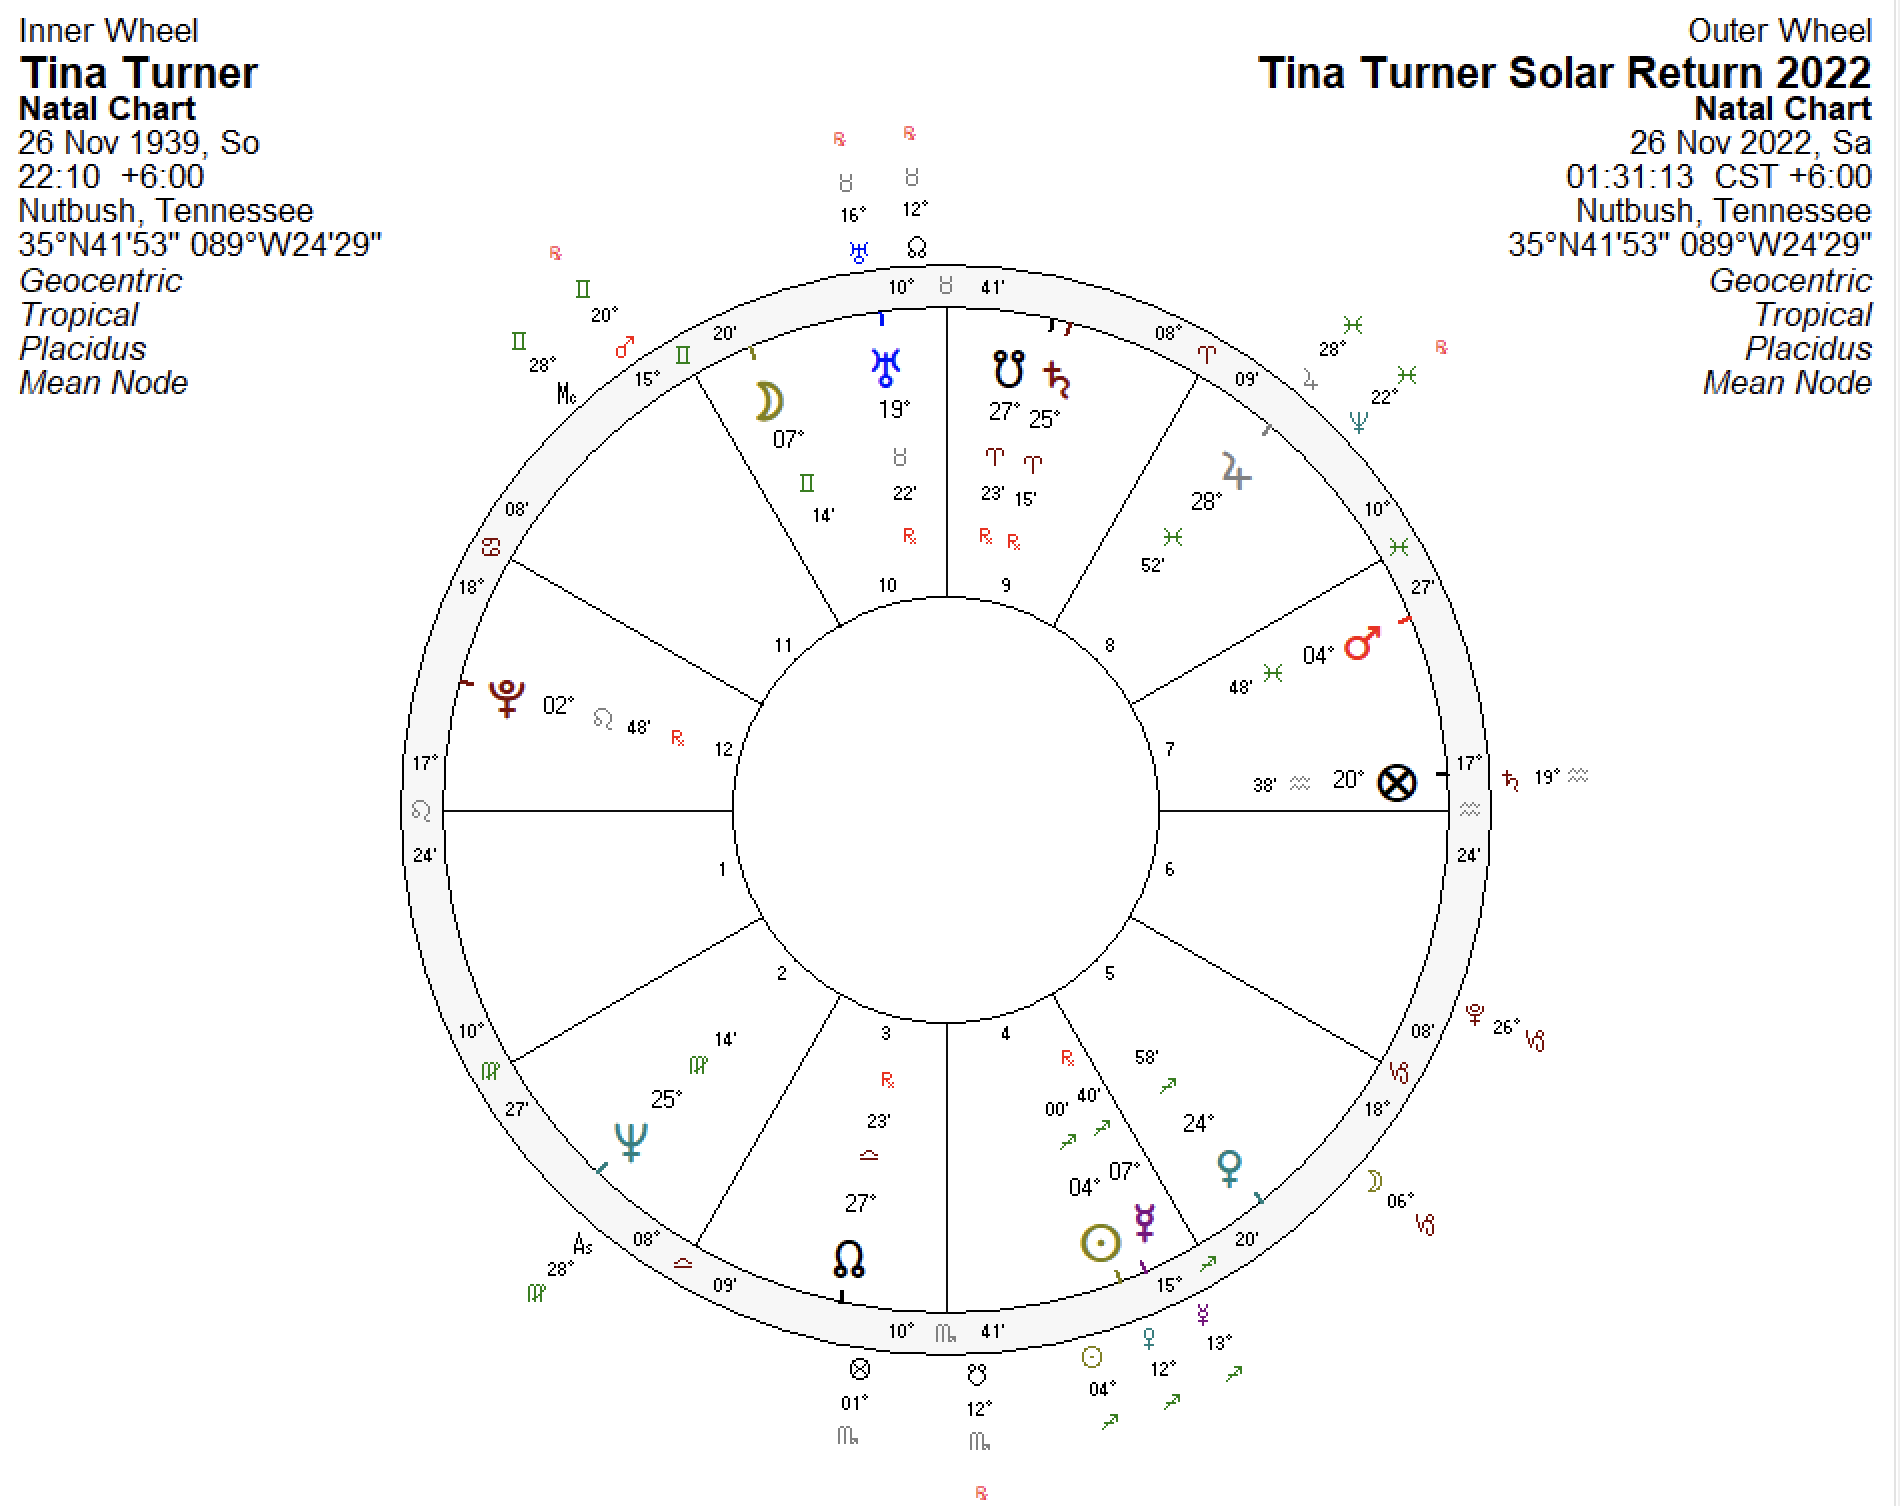 Tina Turner natal chart and return